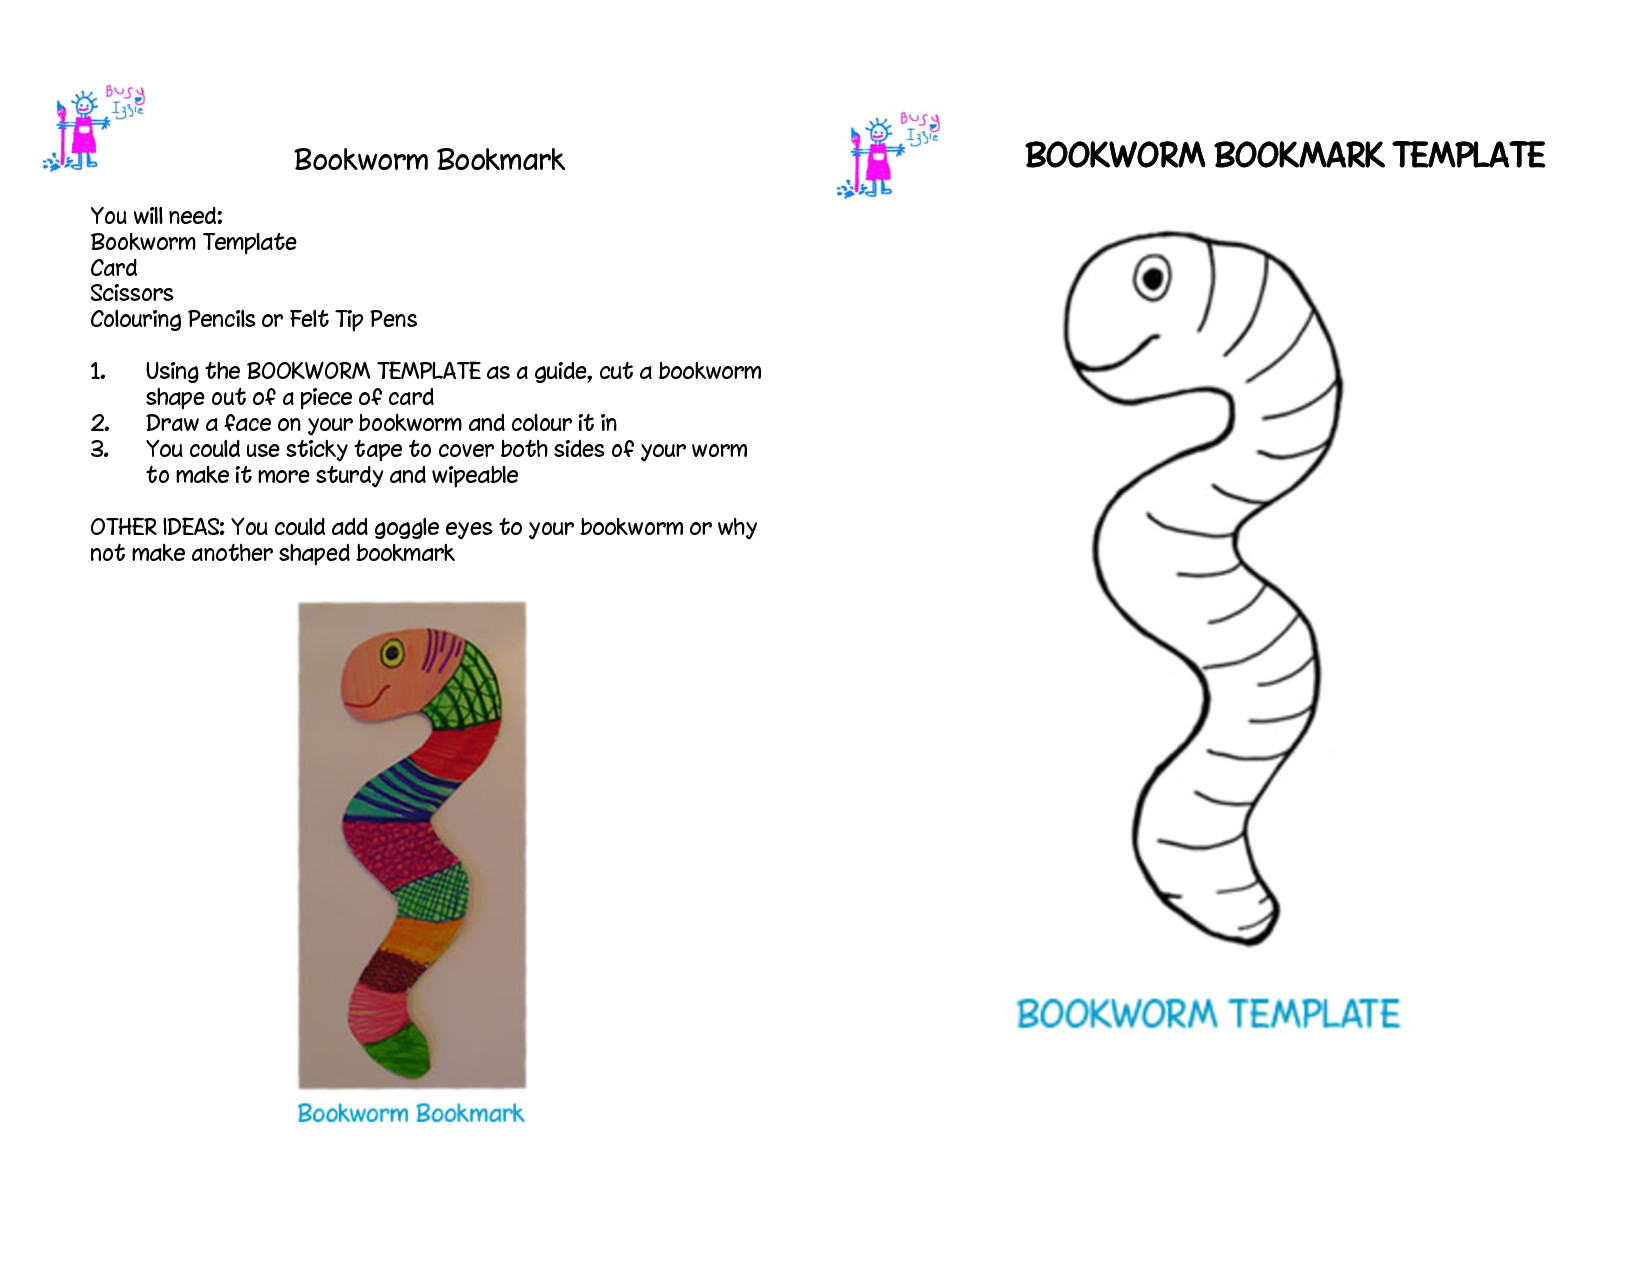 Bookworm Bookmark Template Bookworm Template Google Search Bookworms Pinterest